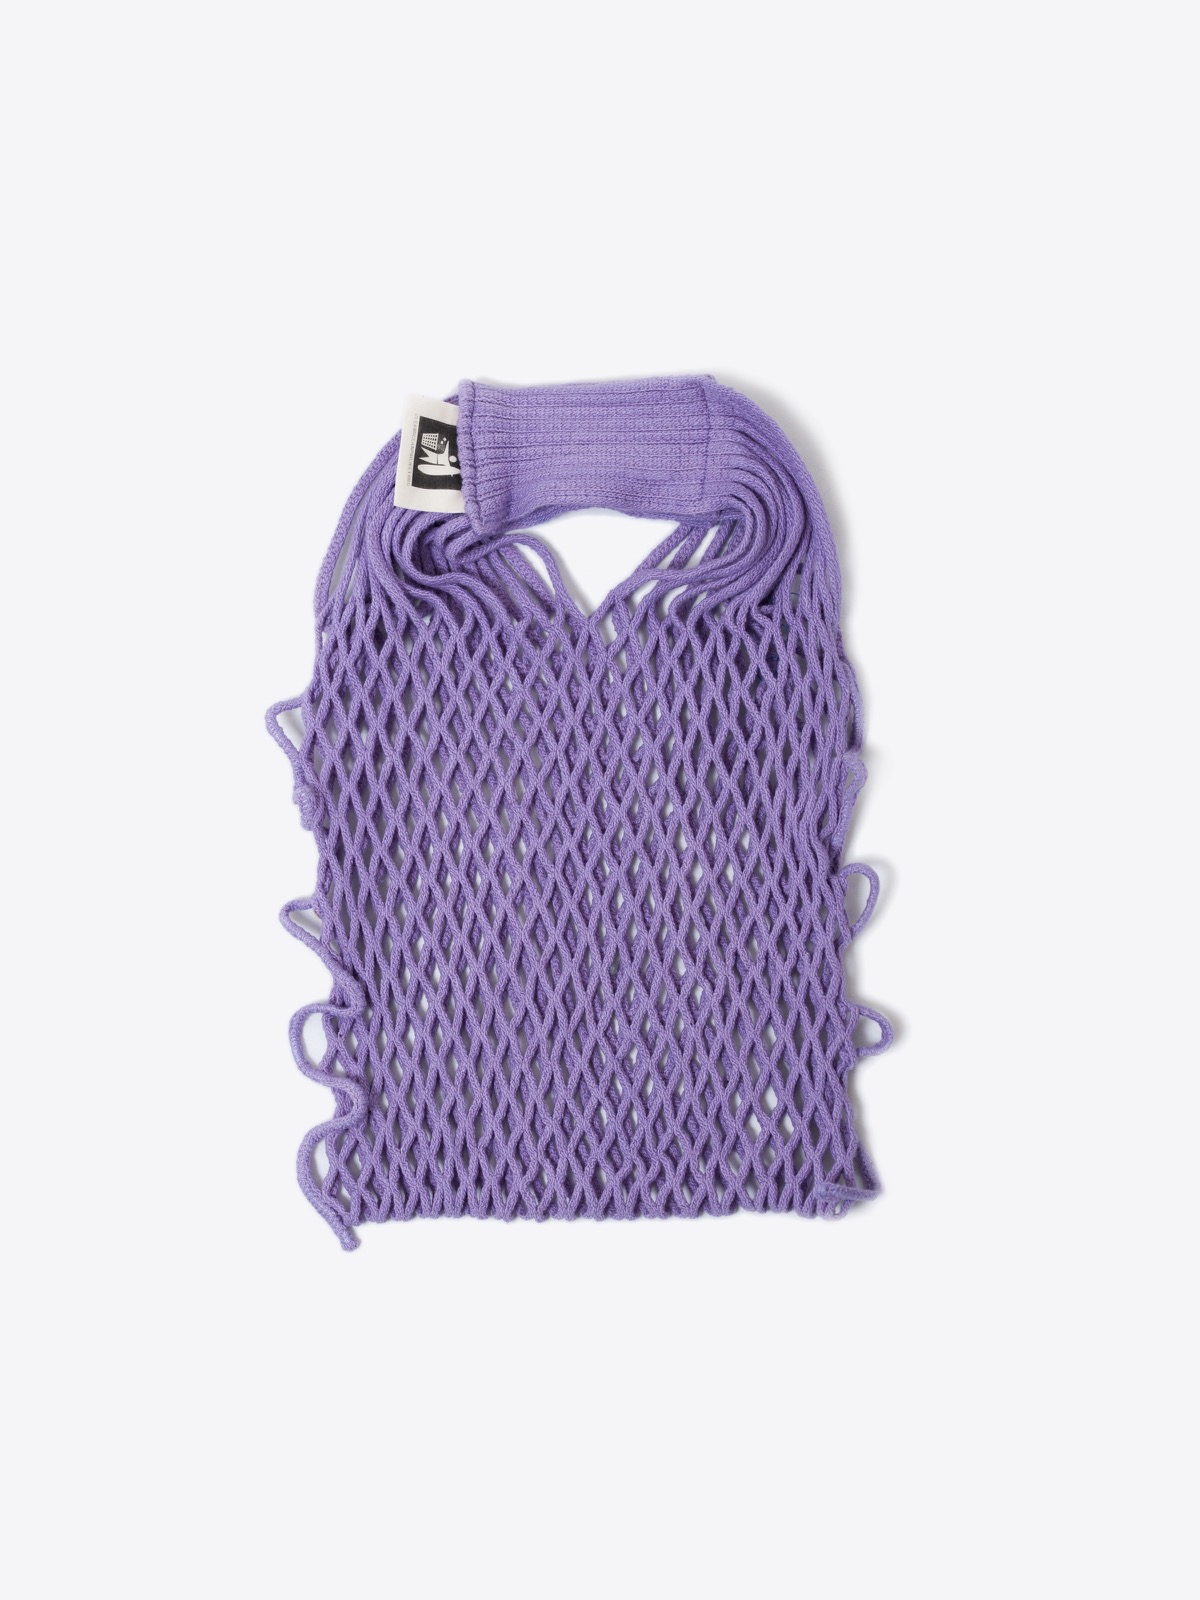 airbag craftworks clean ocean project net bag | lavender